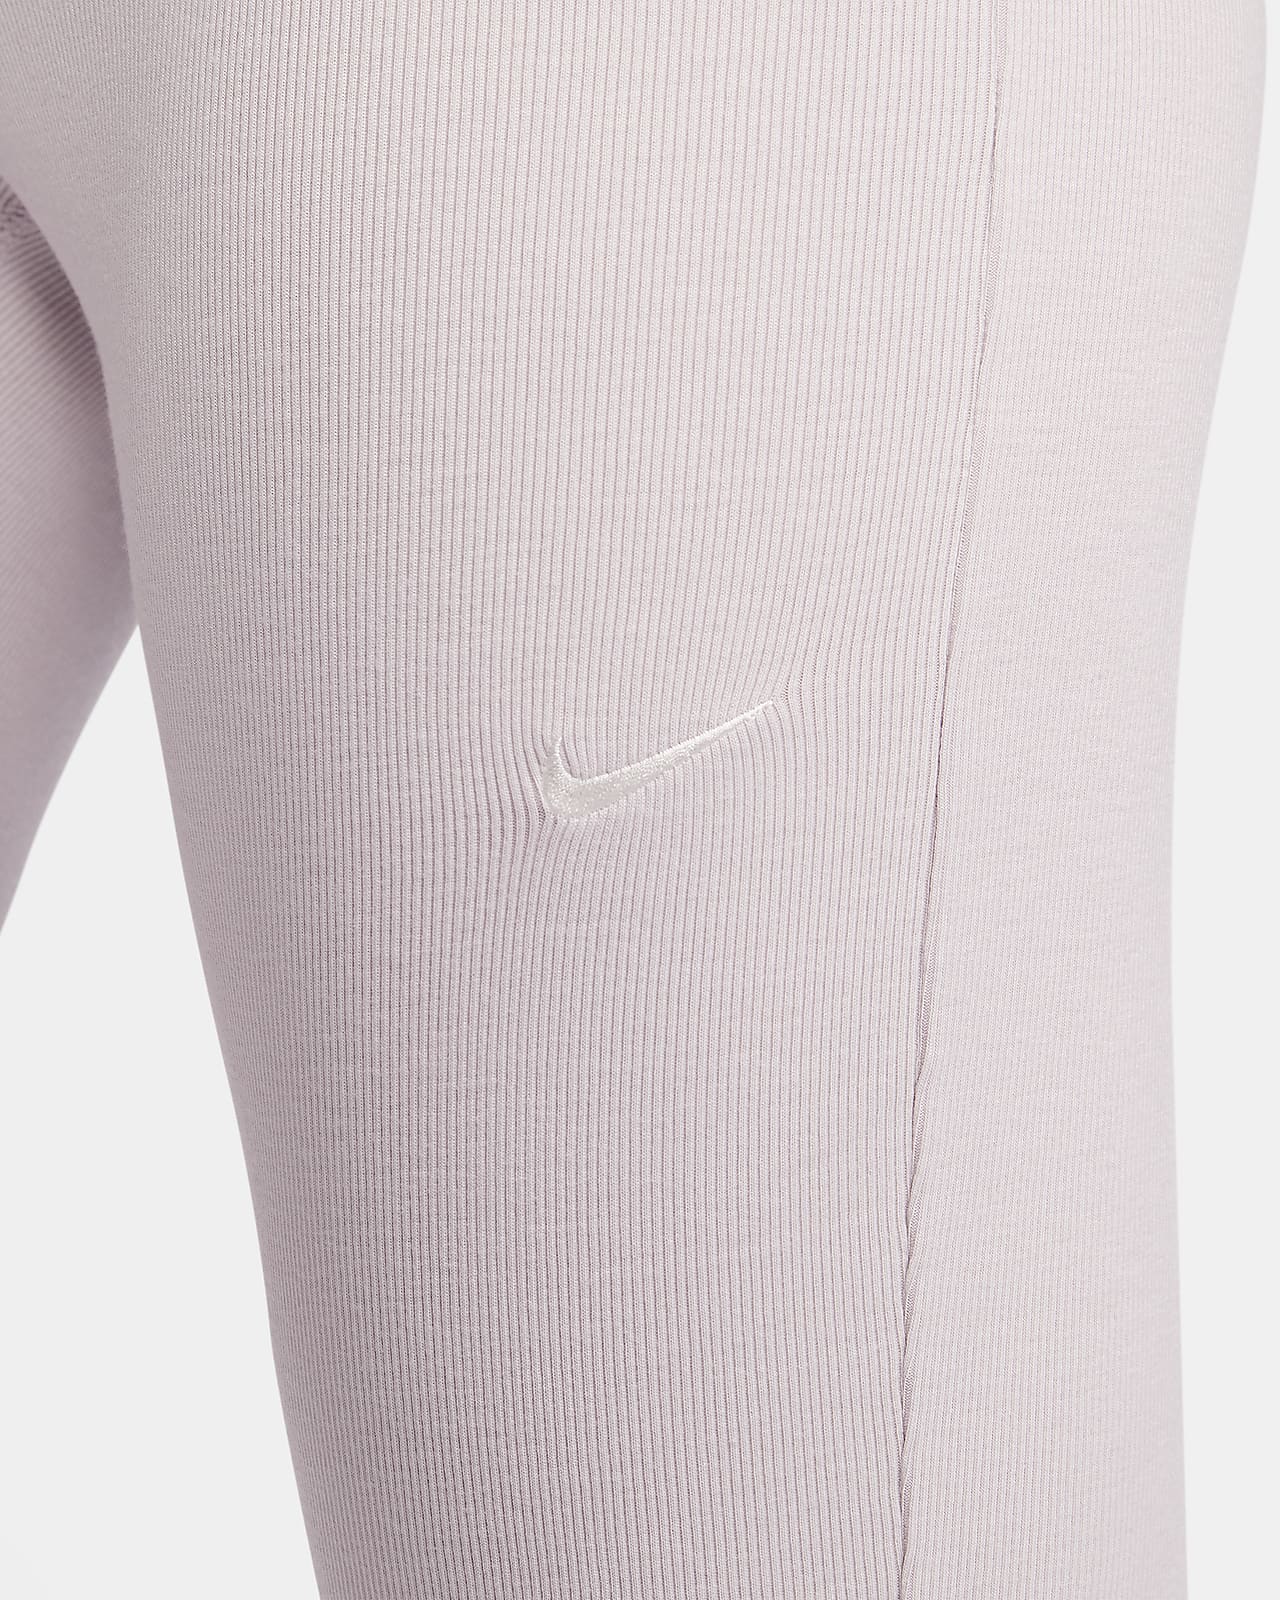 Nike Sportswear Capri Pants ($50) ❤ liked on Polyvore featuring